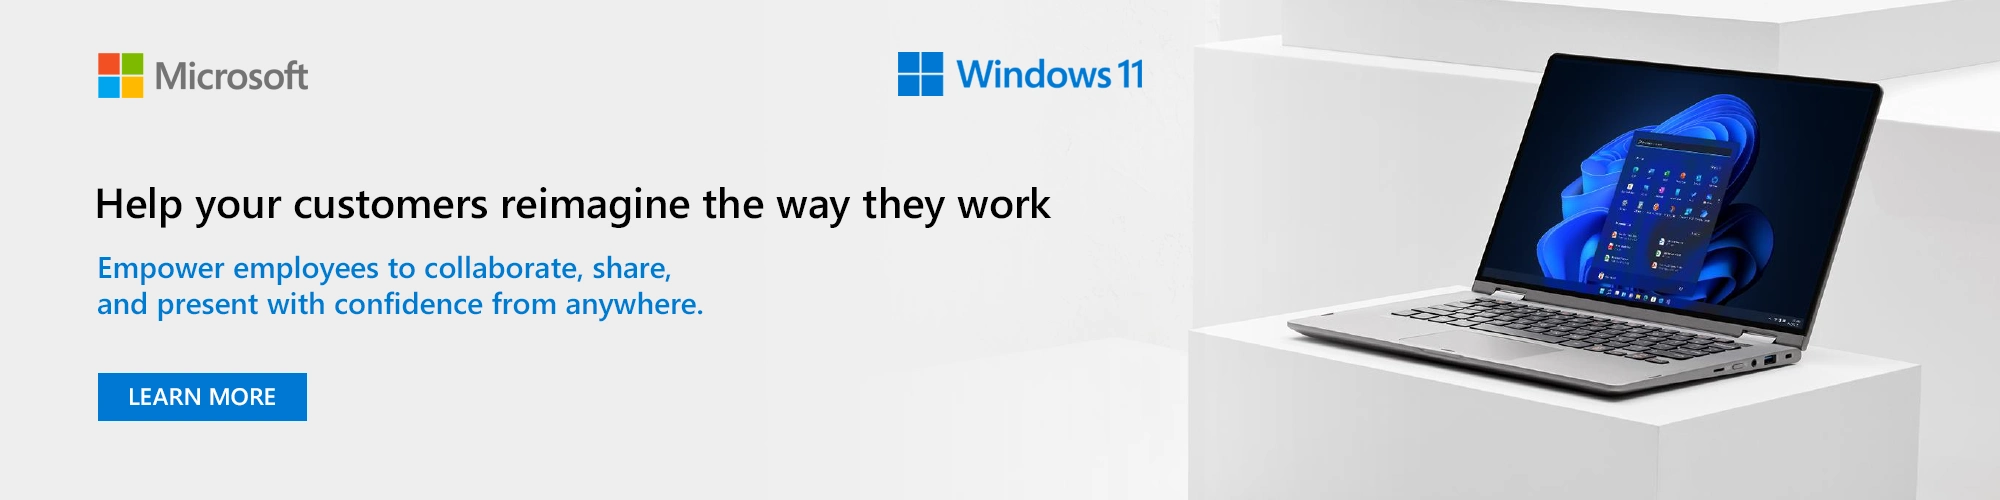 Windows 11 Marquee Reimagine the Way You Work